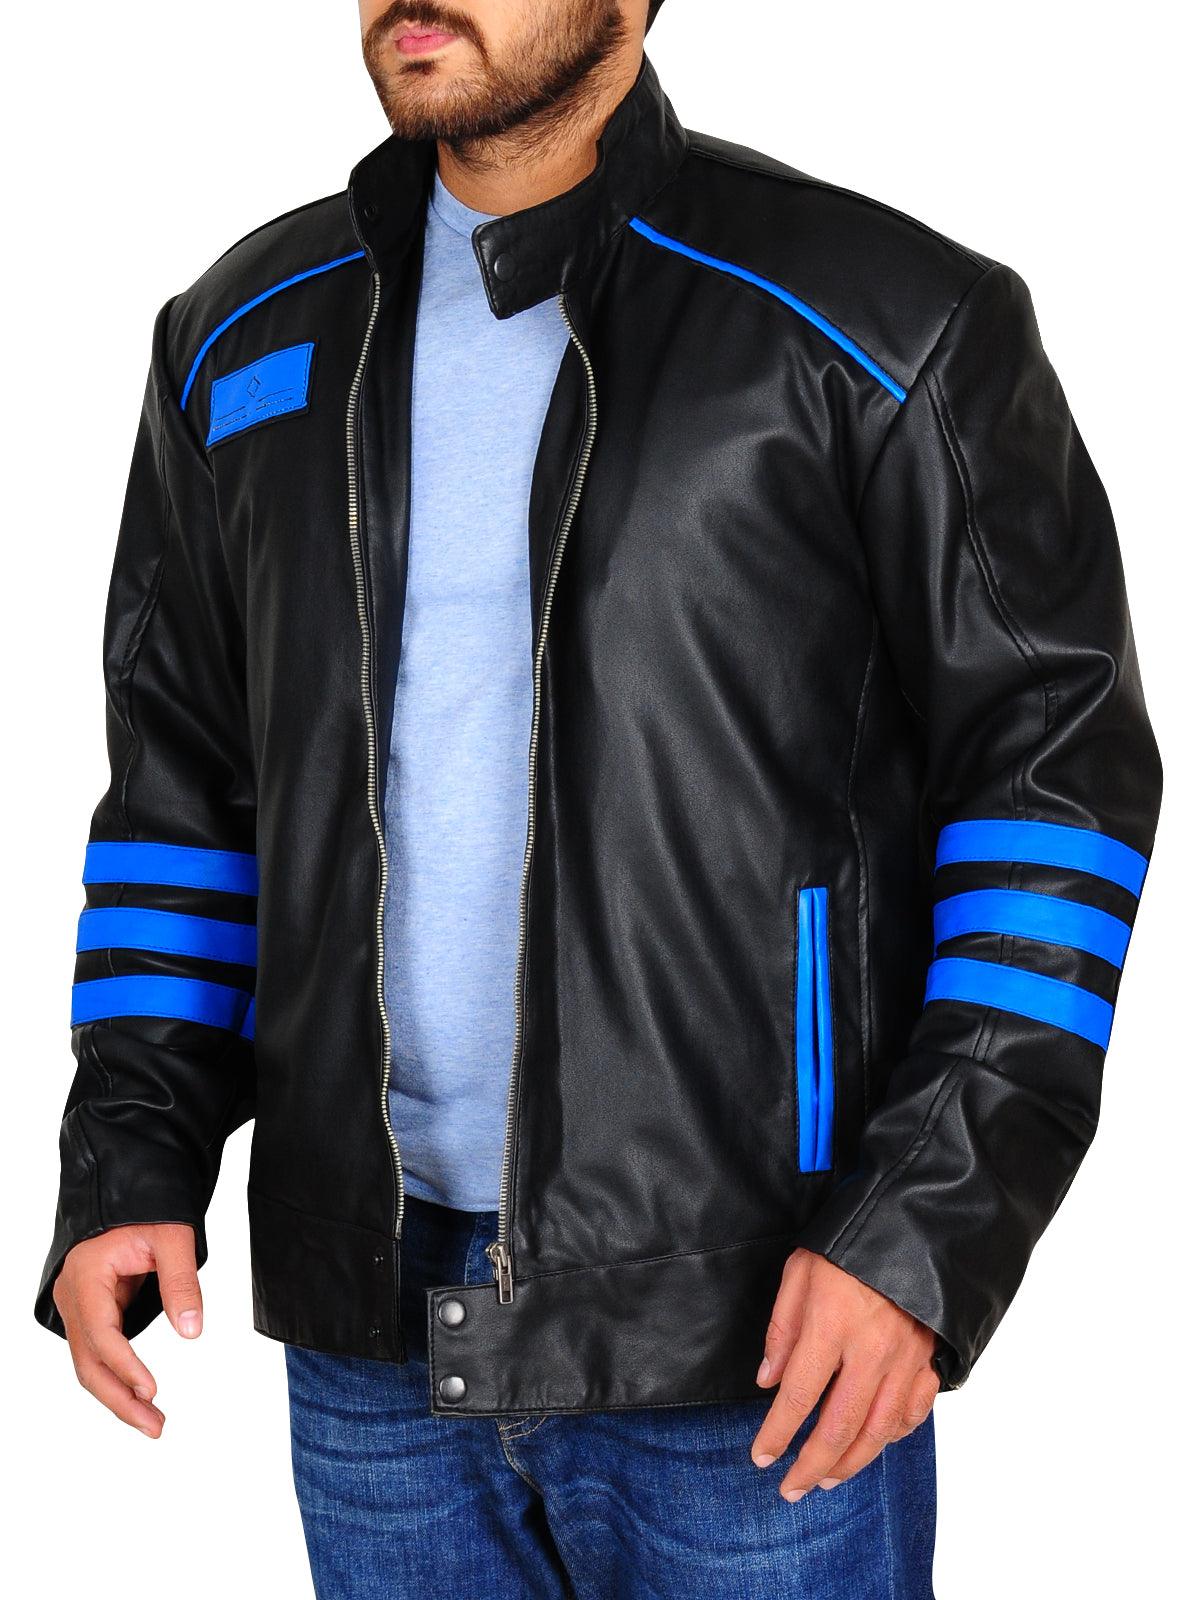 Black & Blue Biker Leather Jacket - Leather Loom